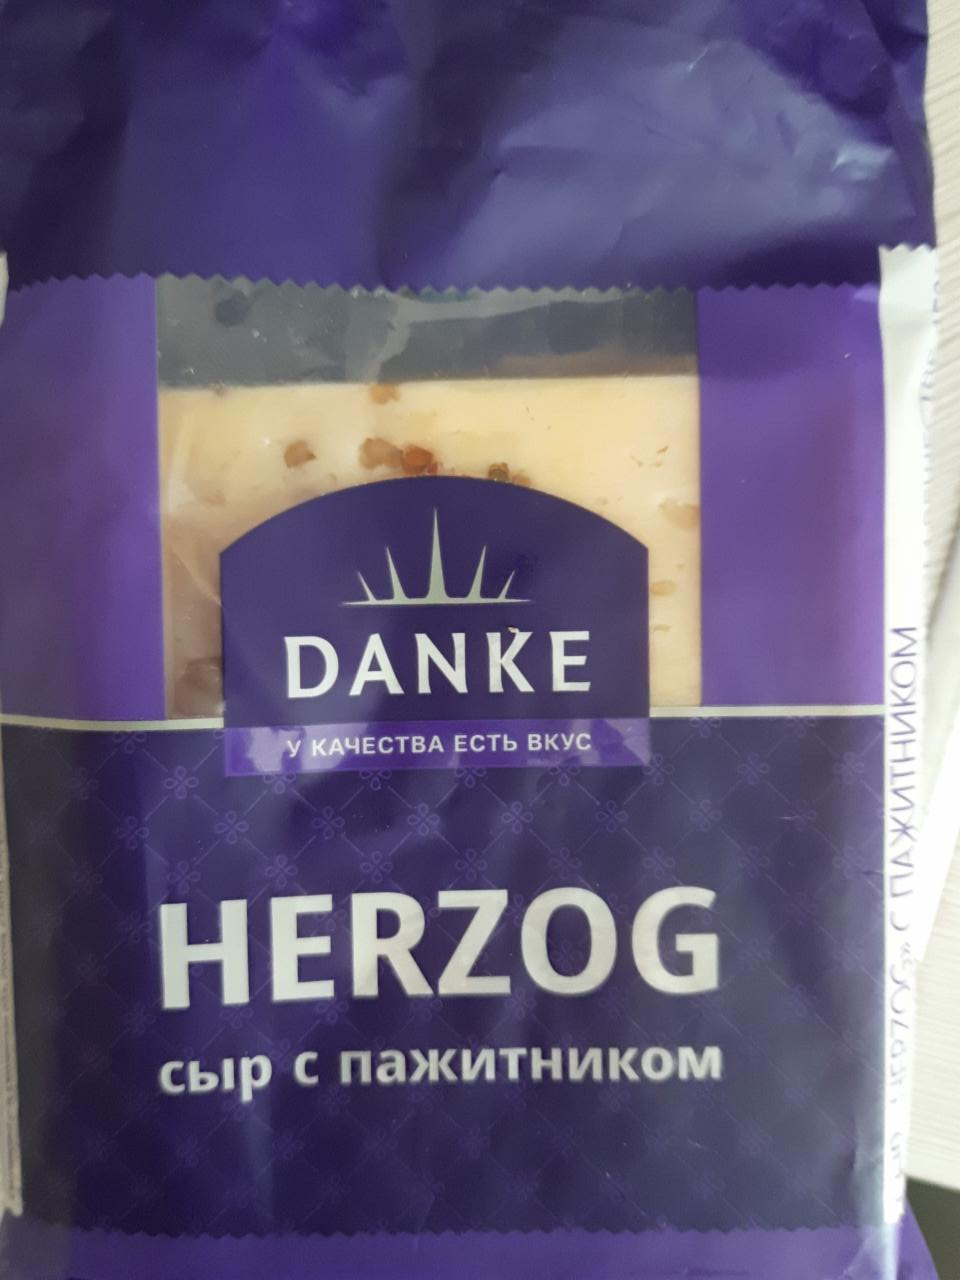 Фото - Сыр с пажитником herzog Danke